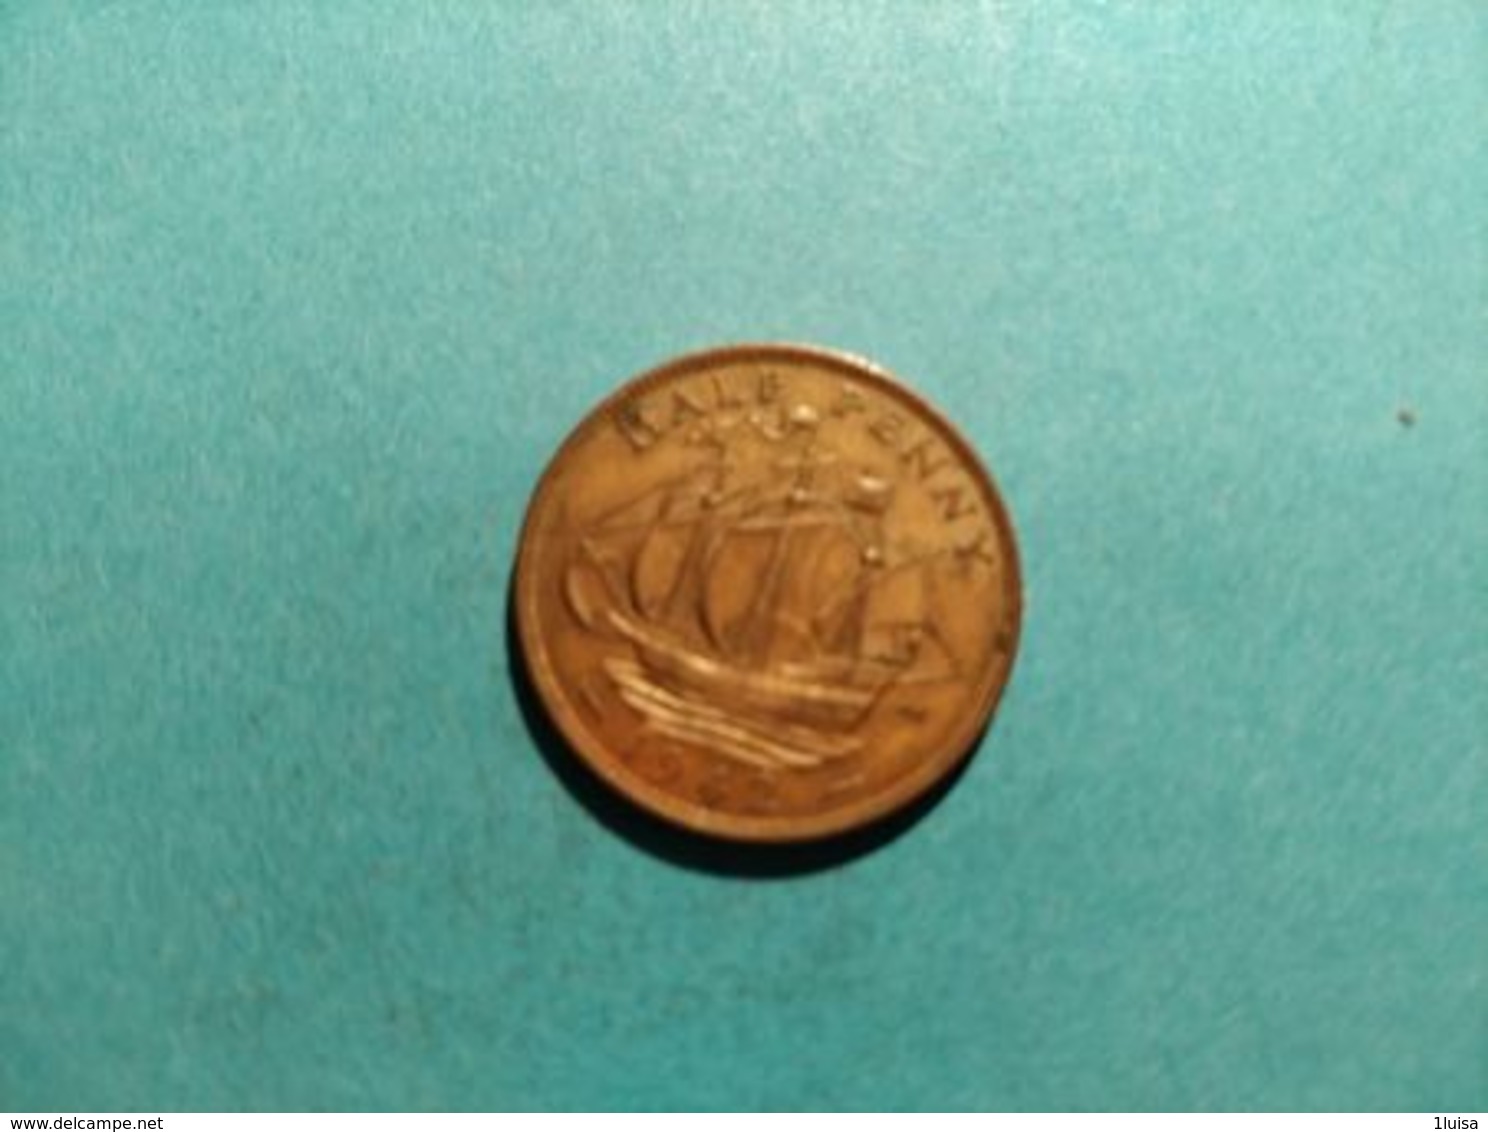 GRAN BRETAGNA 1/2 PENNY 1942 - C. 1/2 Penny